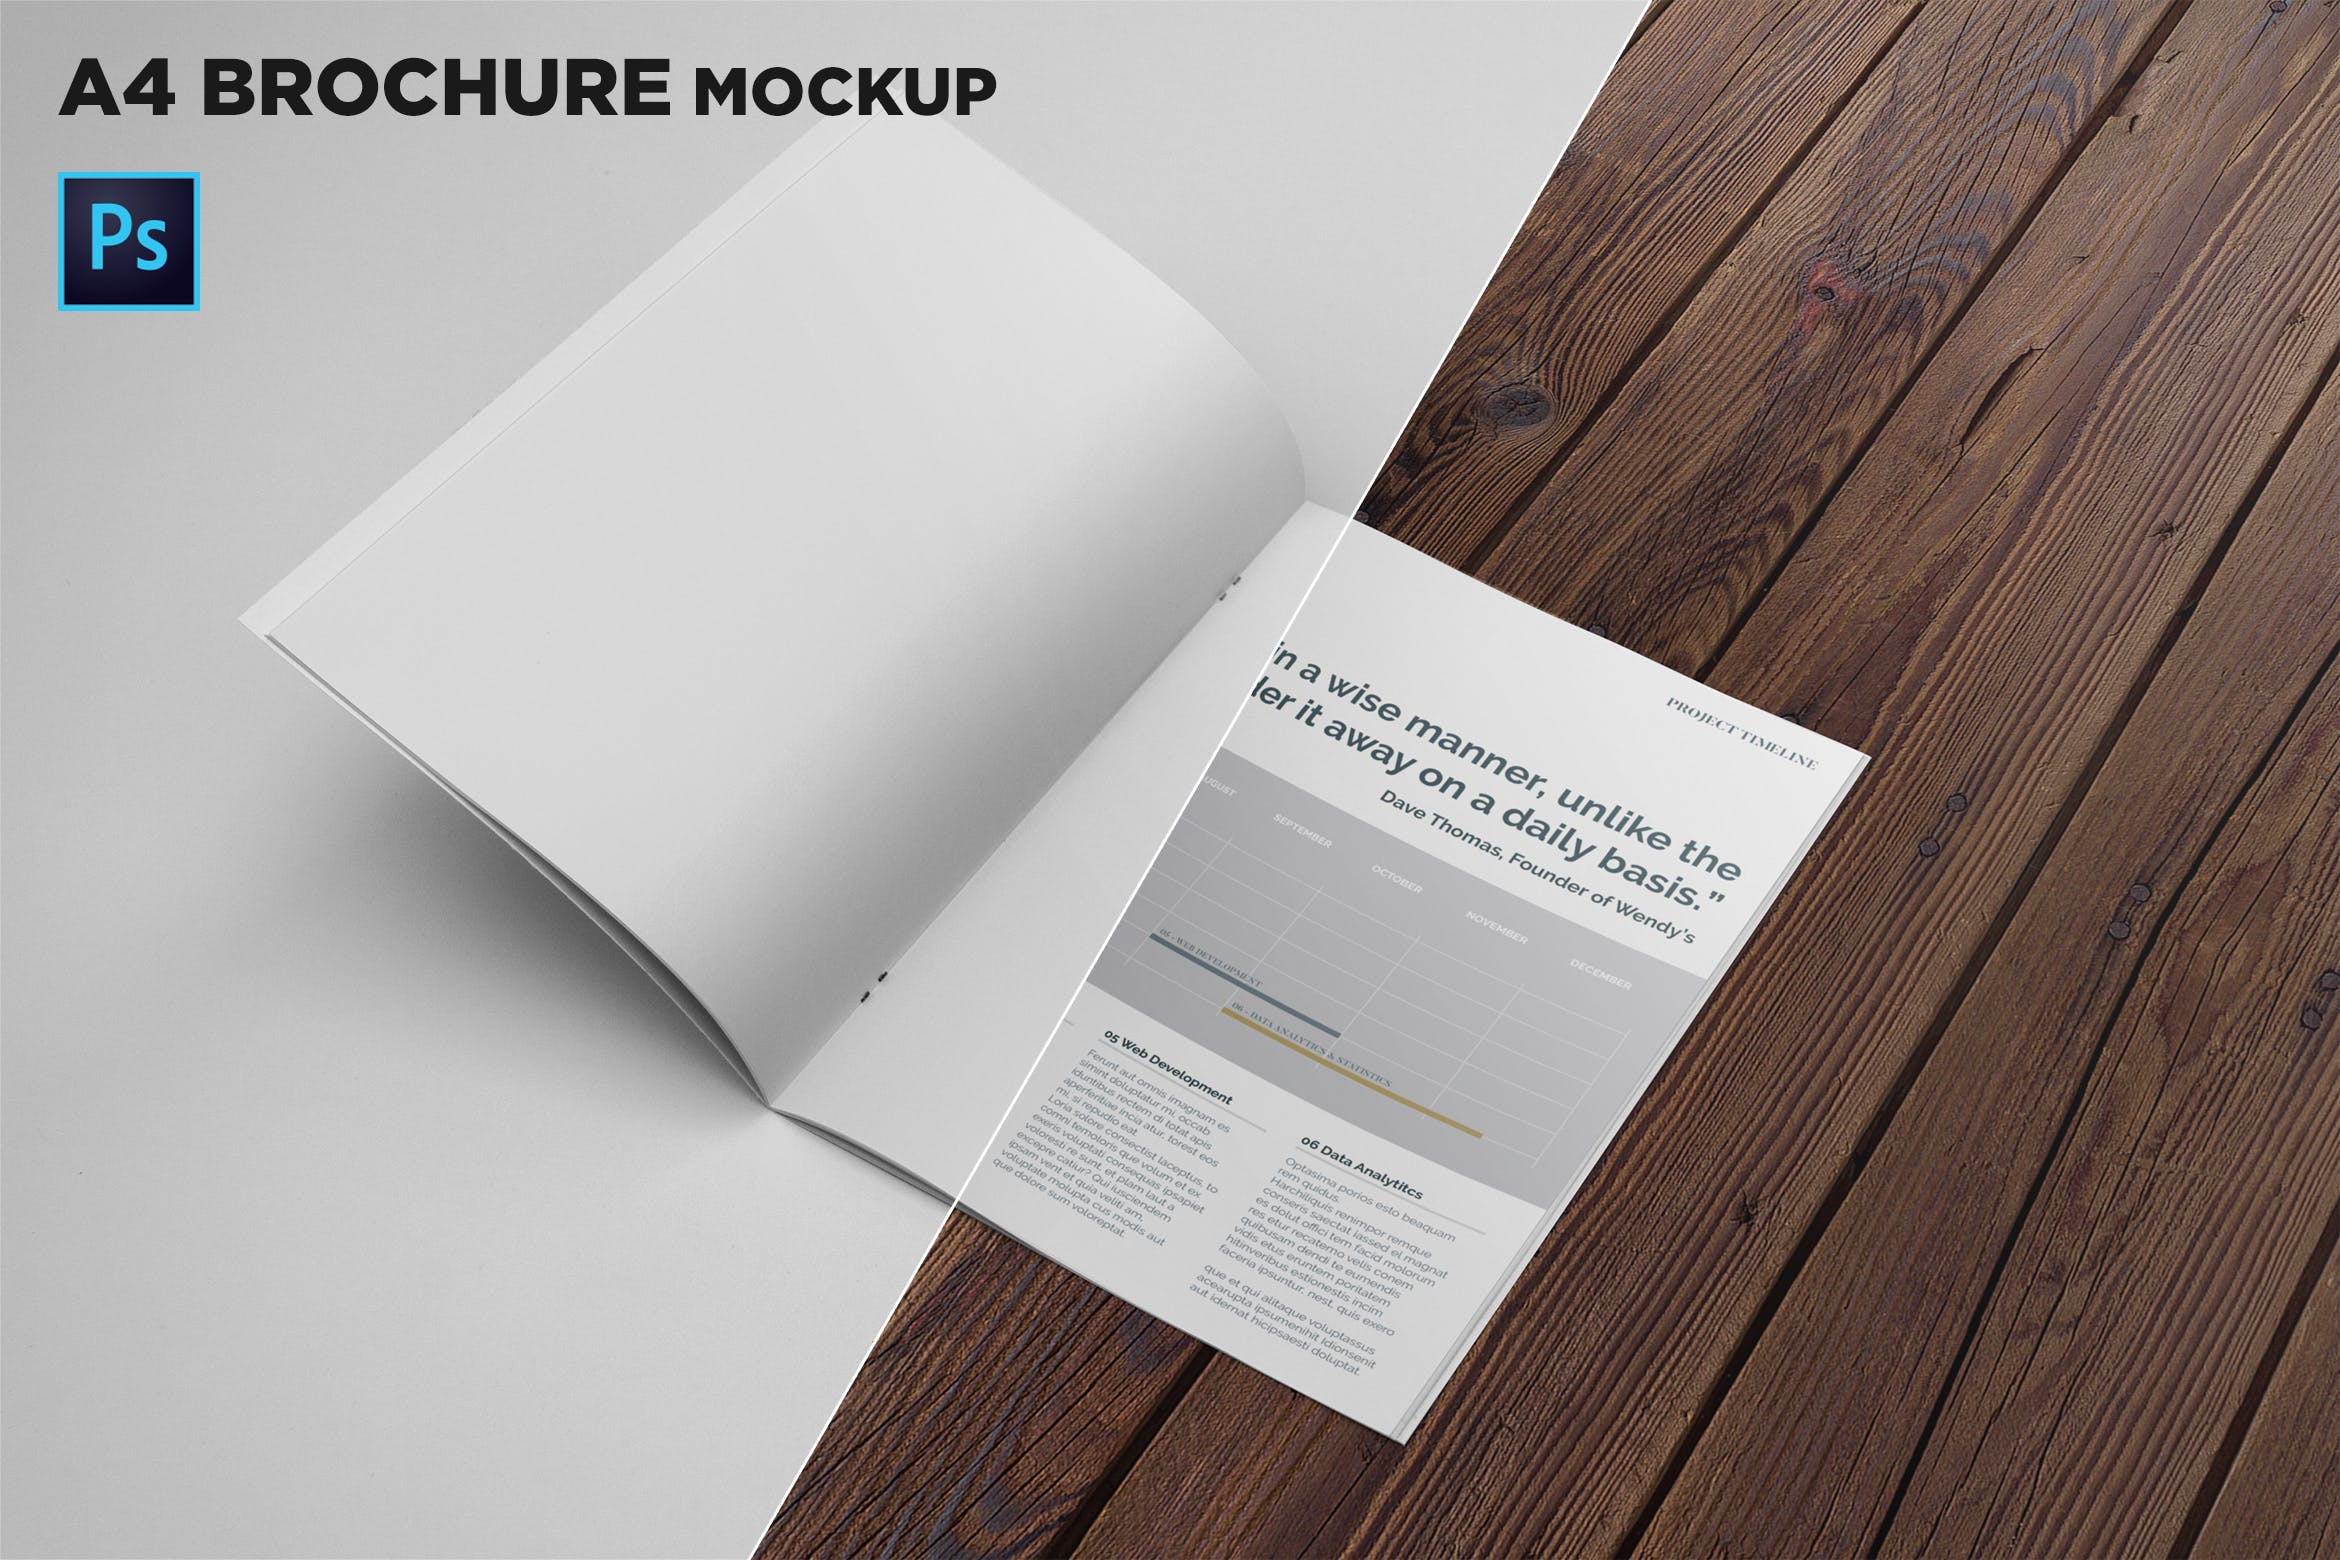 A4尺寸企业/品牌宣传册折叠页效果图样机蚂蚁素材精选 A4 Brochure Mockup Folded Page插图